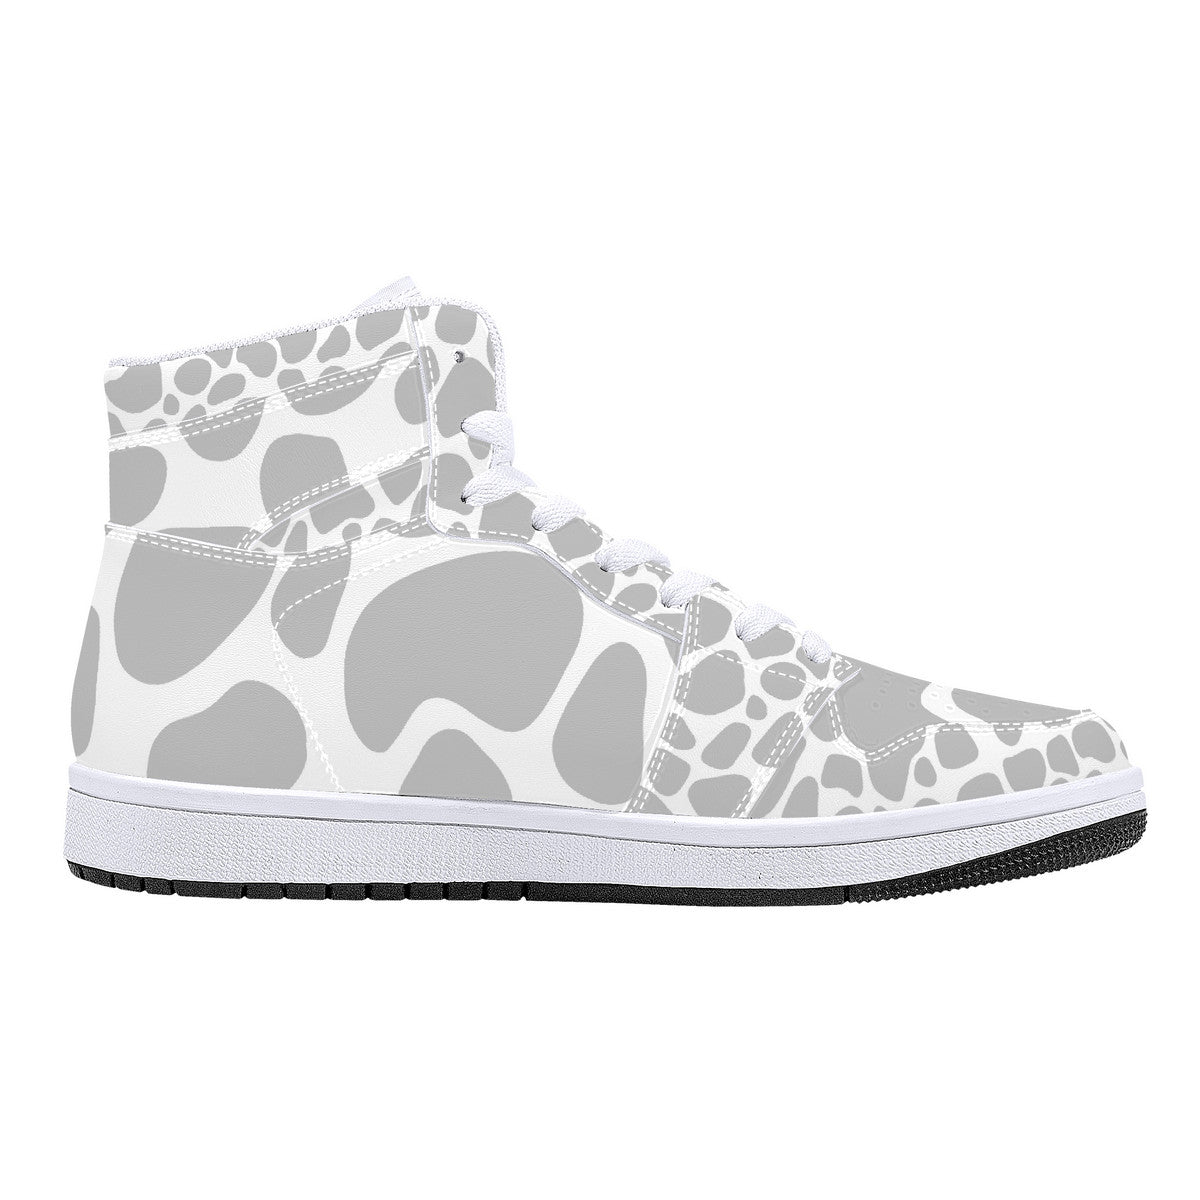 "Nix Giraffe" High-Top Synthetic Leather Sneakers